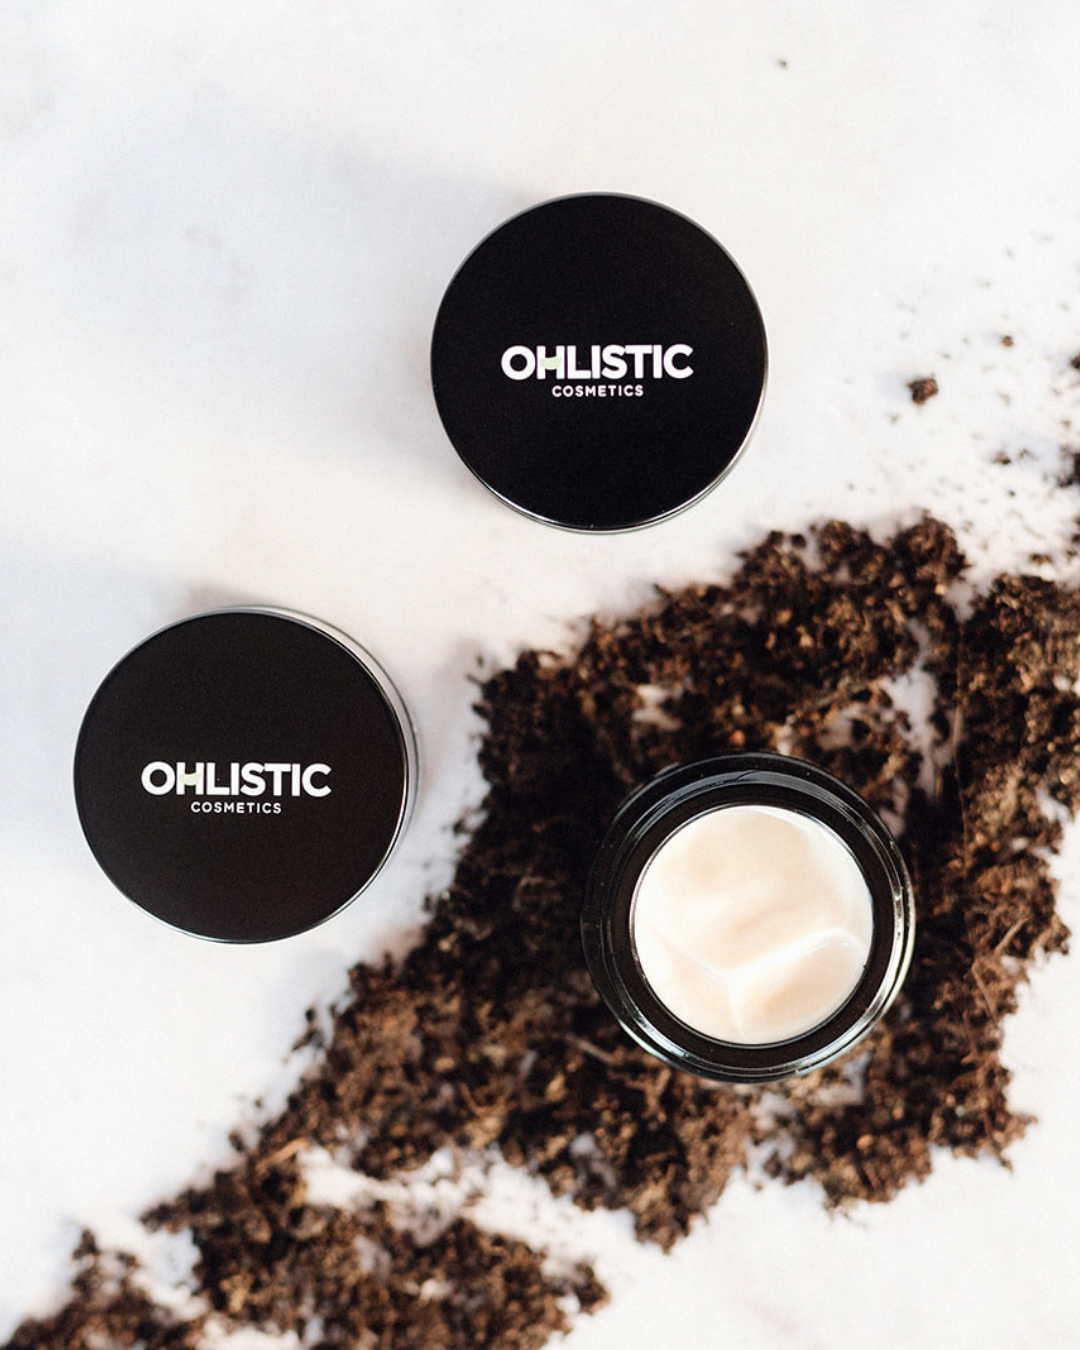 Ohlistic cosmetics